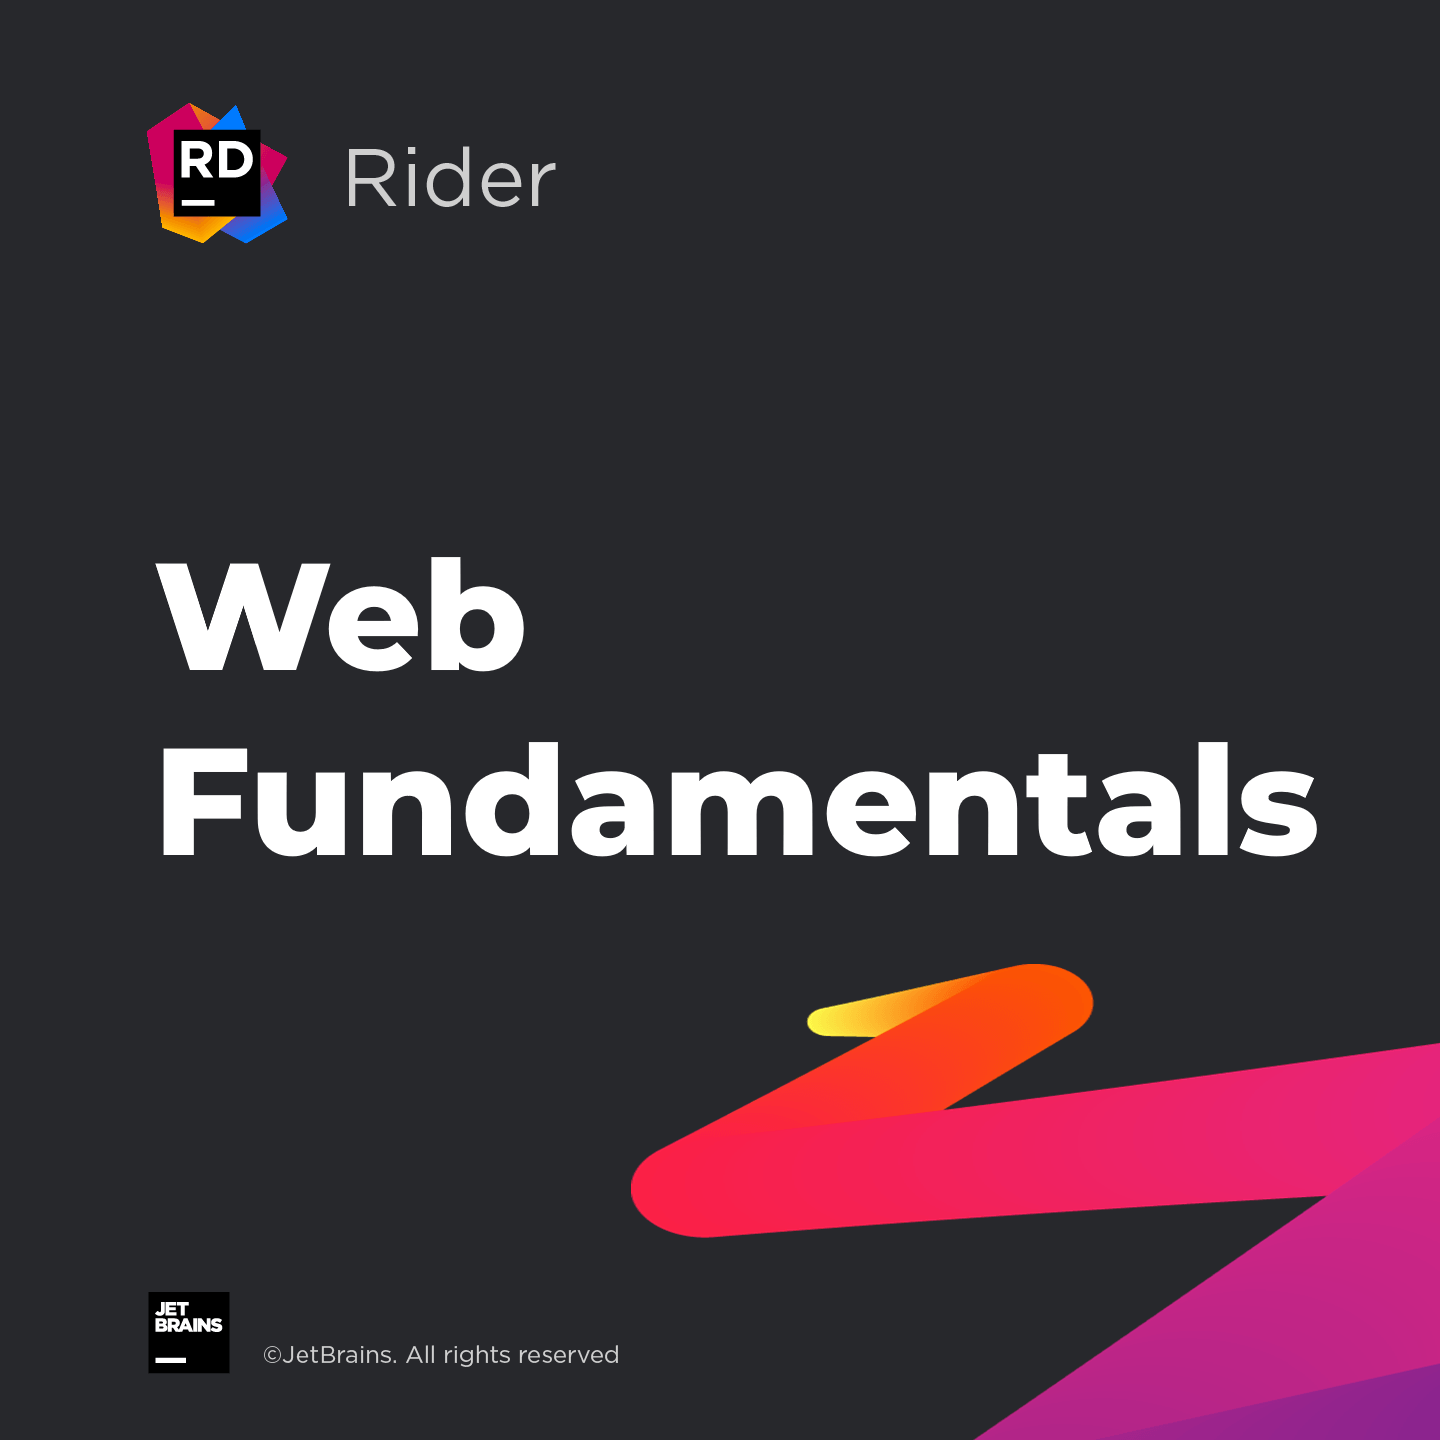 Web Fundamentals in Rider